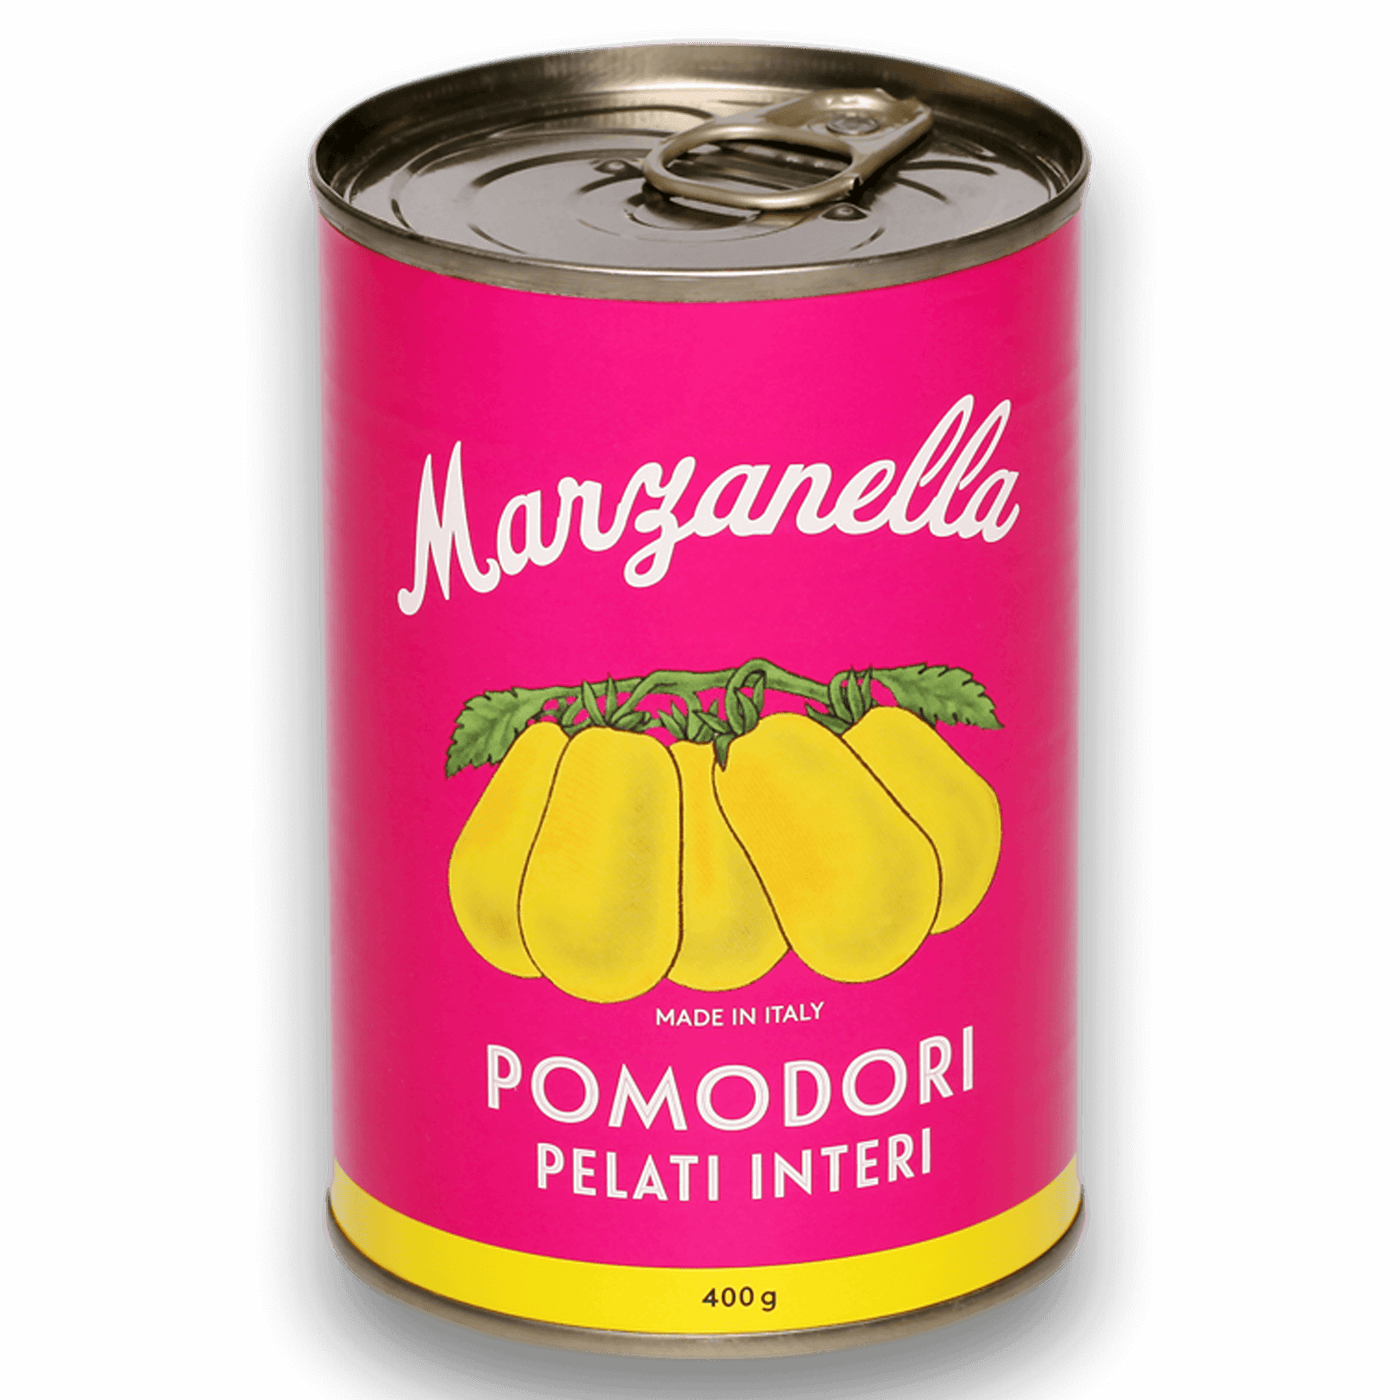 Gelbe Tomaten in der Dose "Marzanella" - je 400g